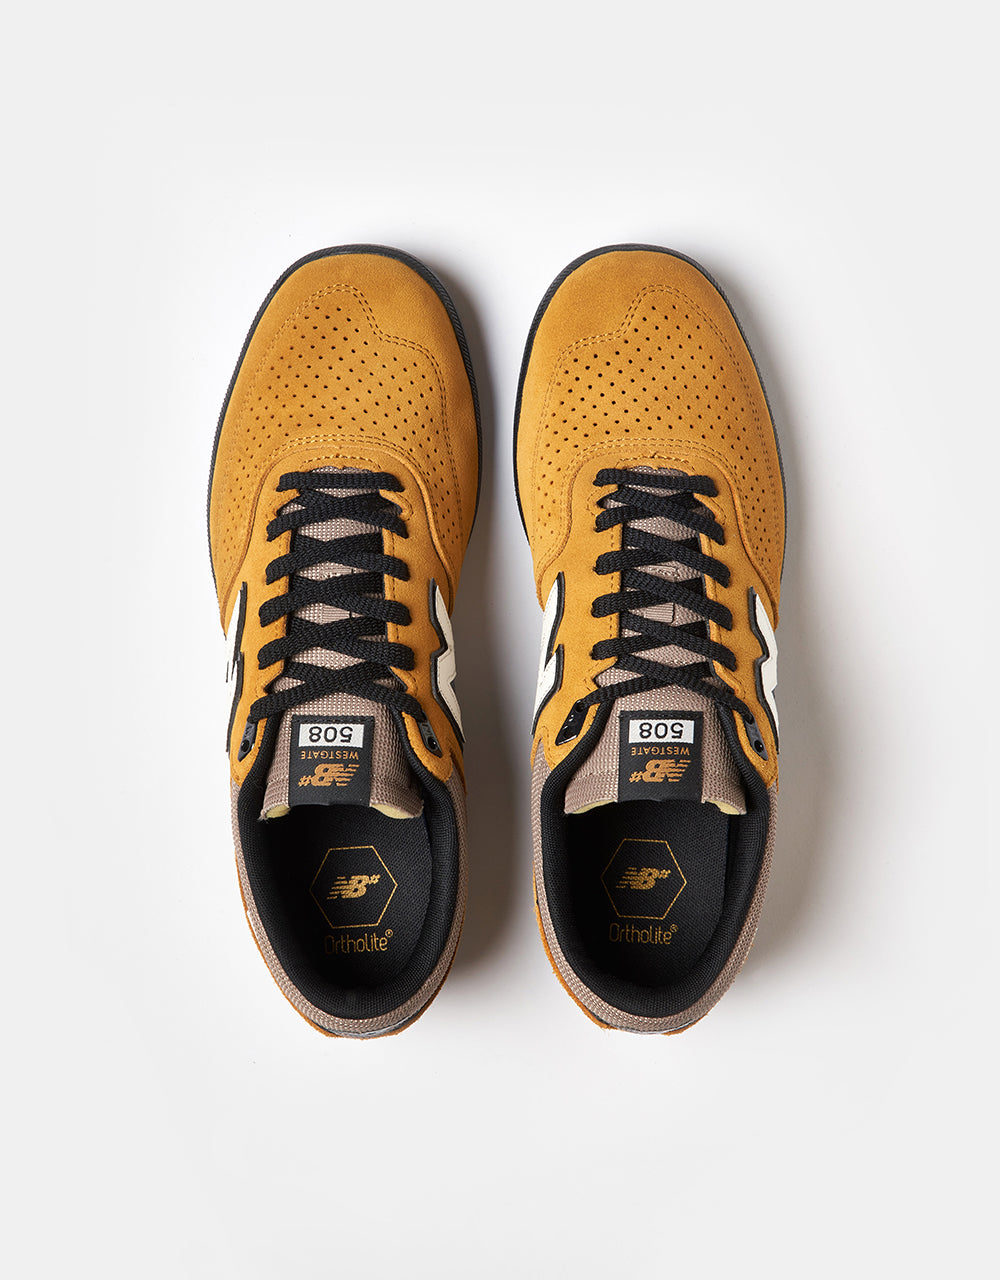 New Balance Numeric Brandon Westgate 508 Skate Shoes - Caramel/Black